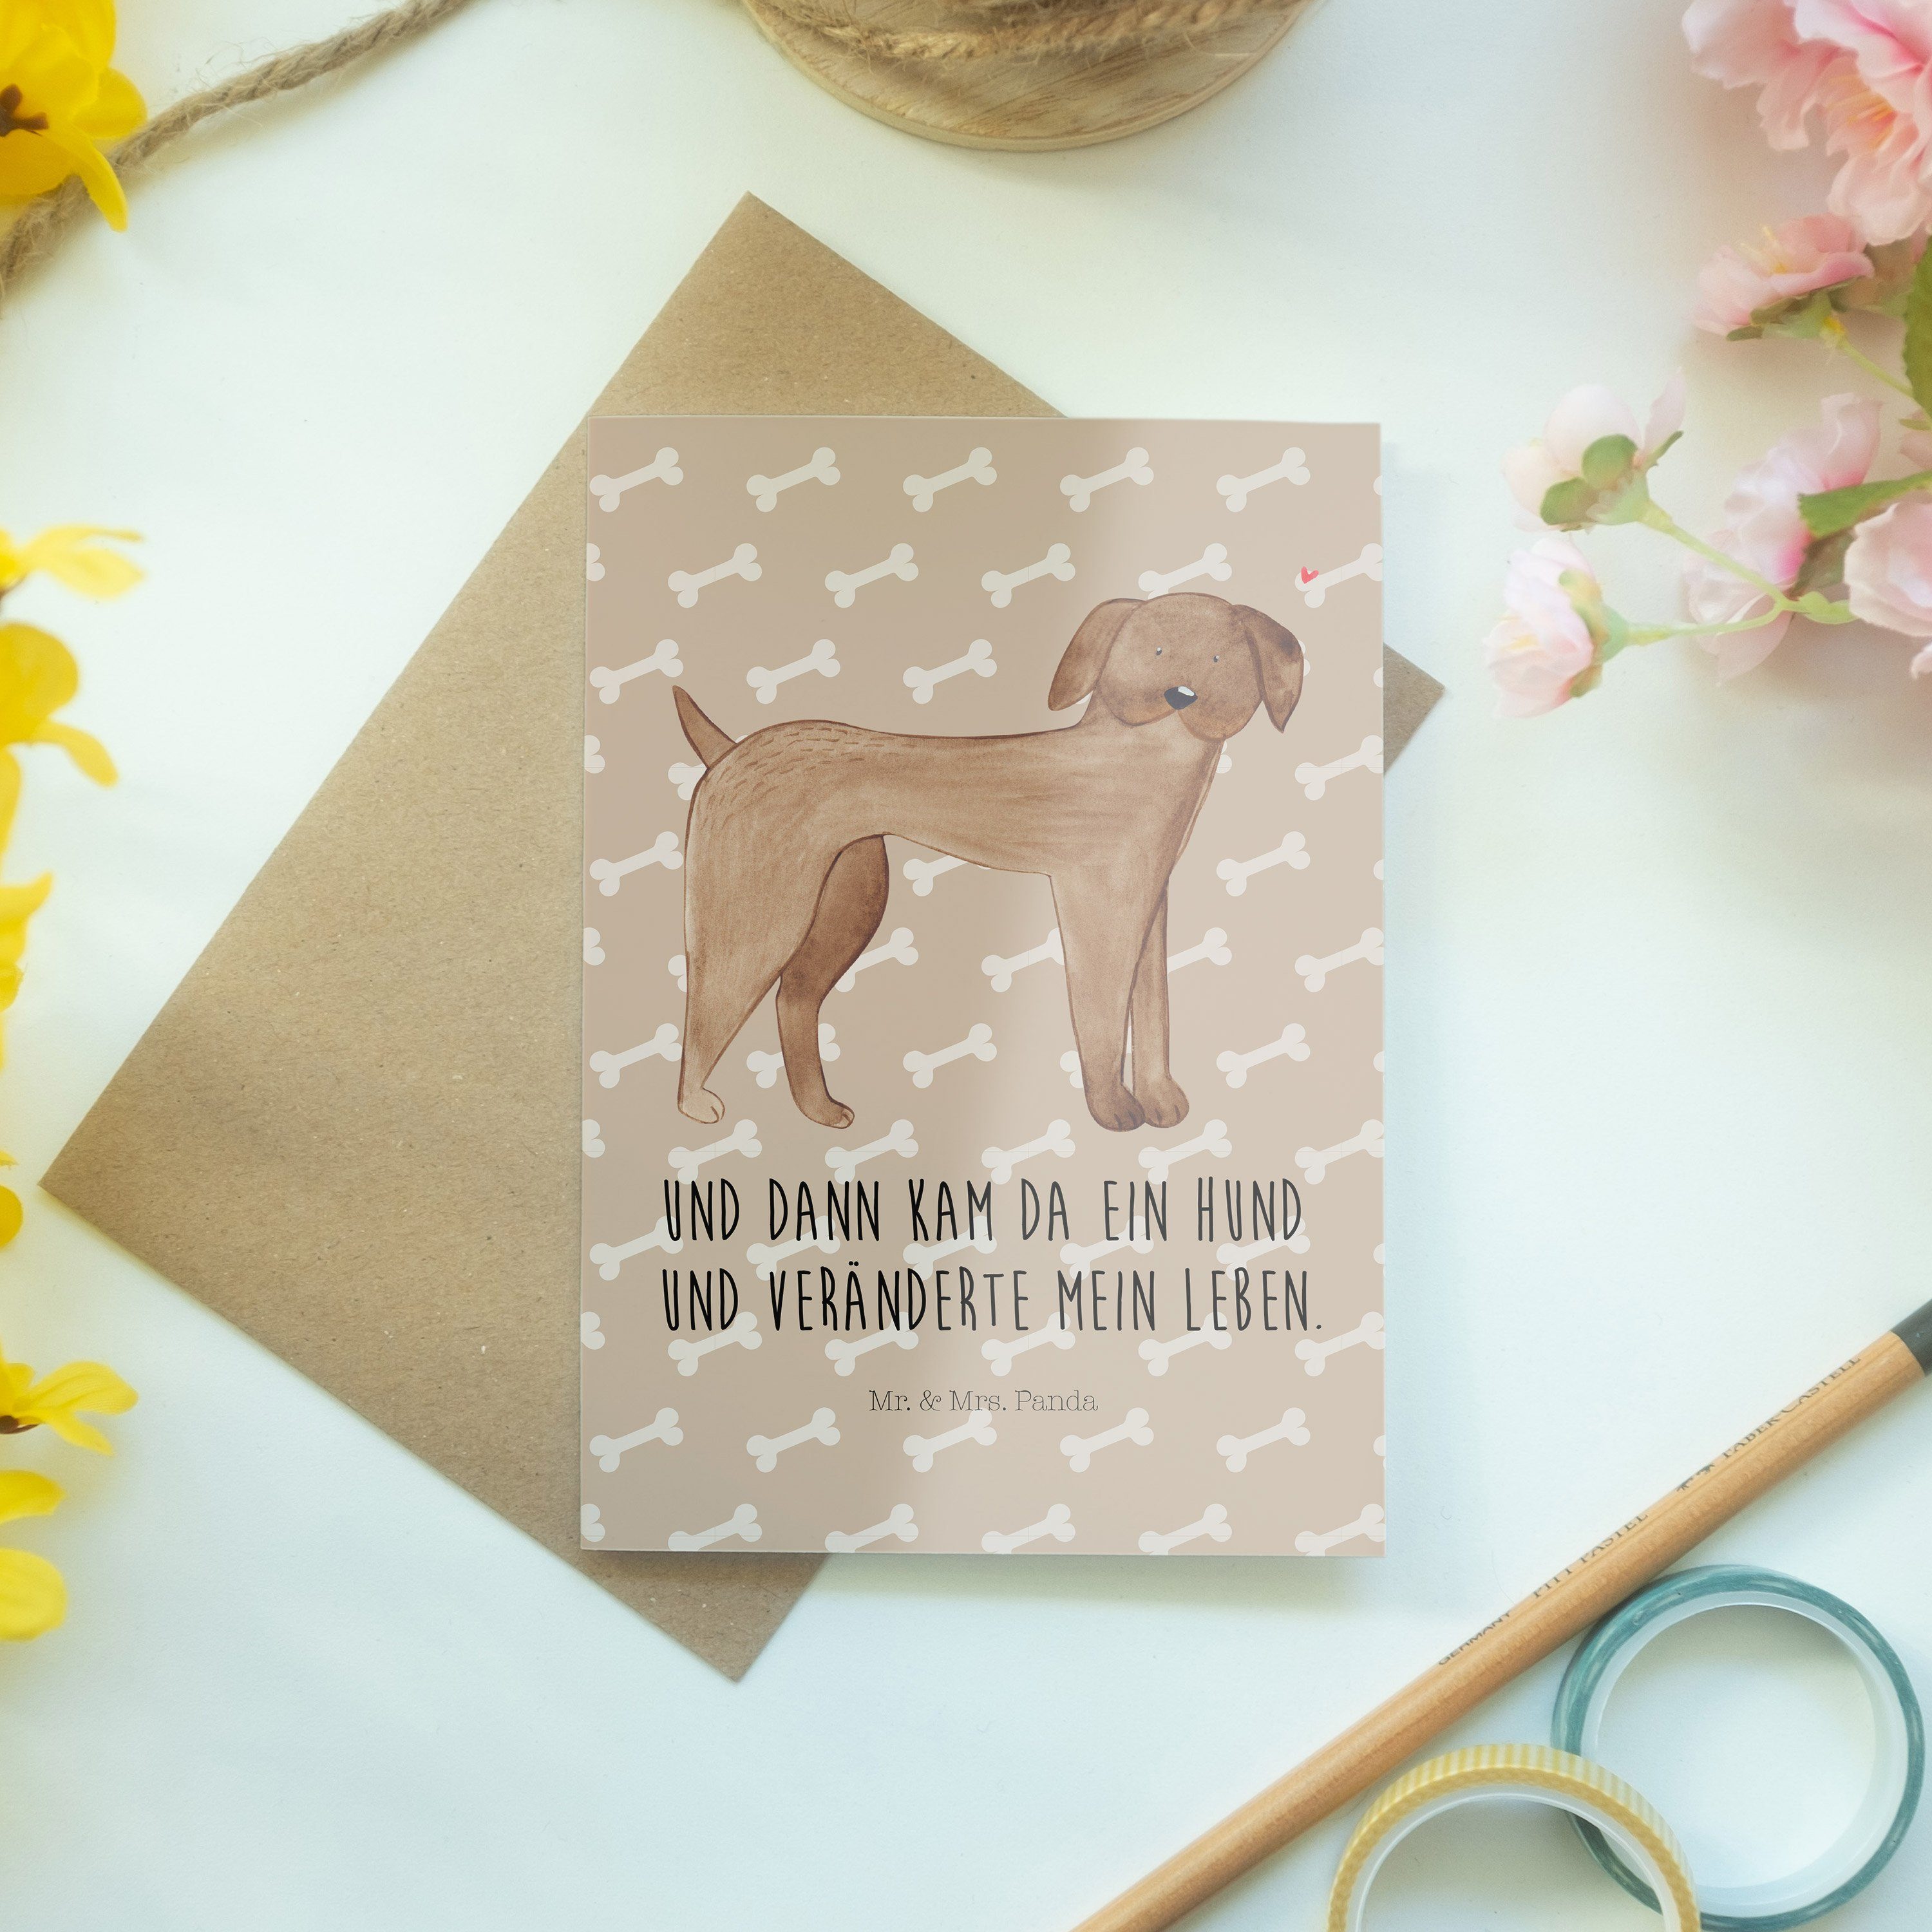 Mr. & Mrs. Panda Grußkarte Hund - - Herz, Karte, Einladungskarte, Glü Hundeglück Geschenk, Dogge